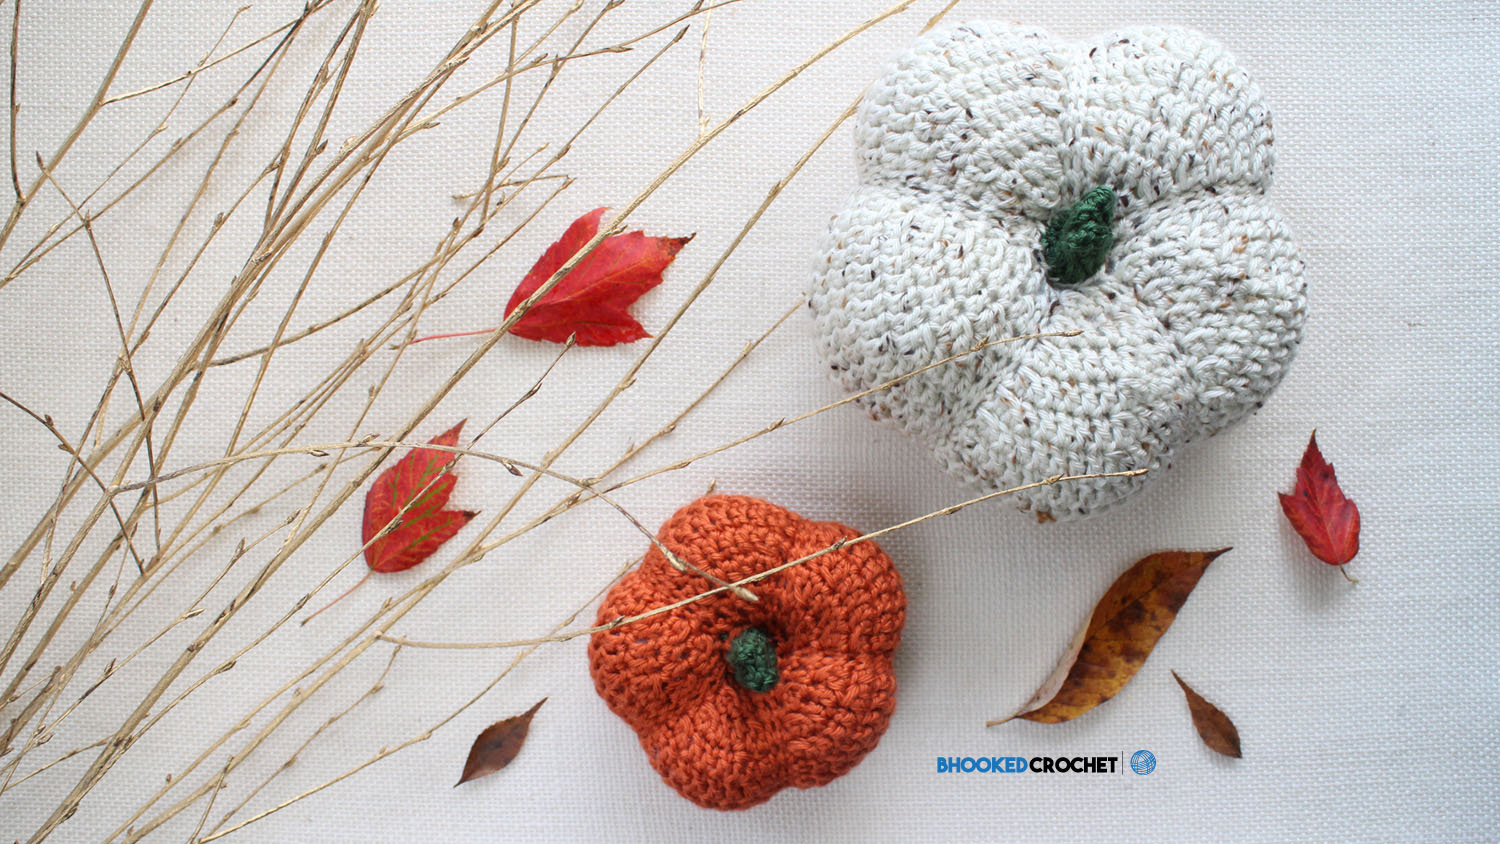 Crochet With Me! Fun Crochet Pumpkins from Yarnspirations